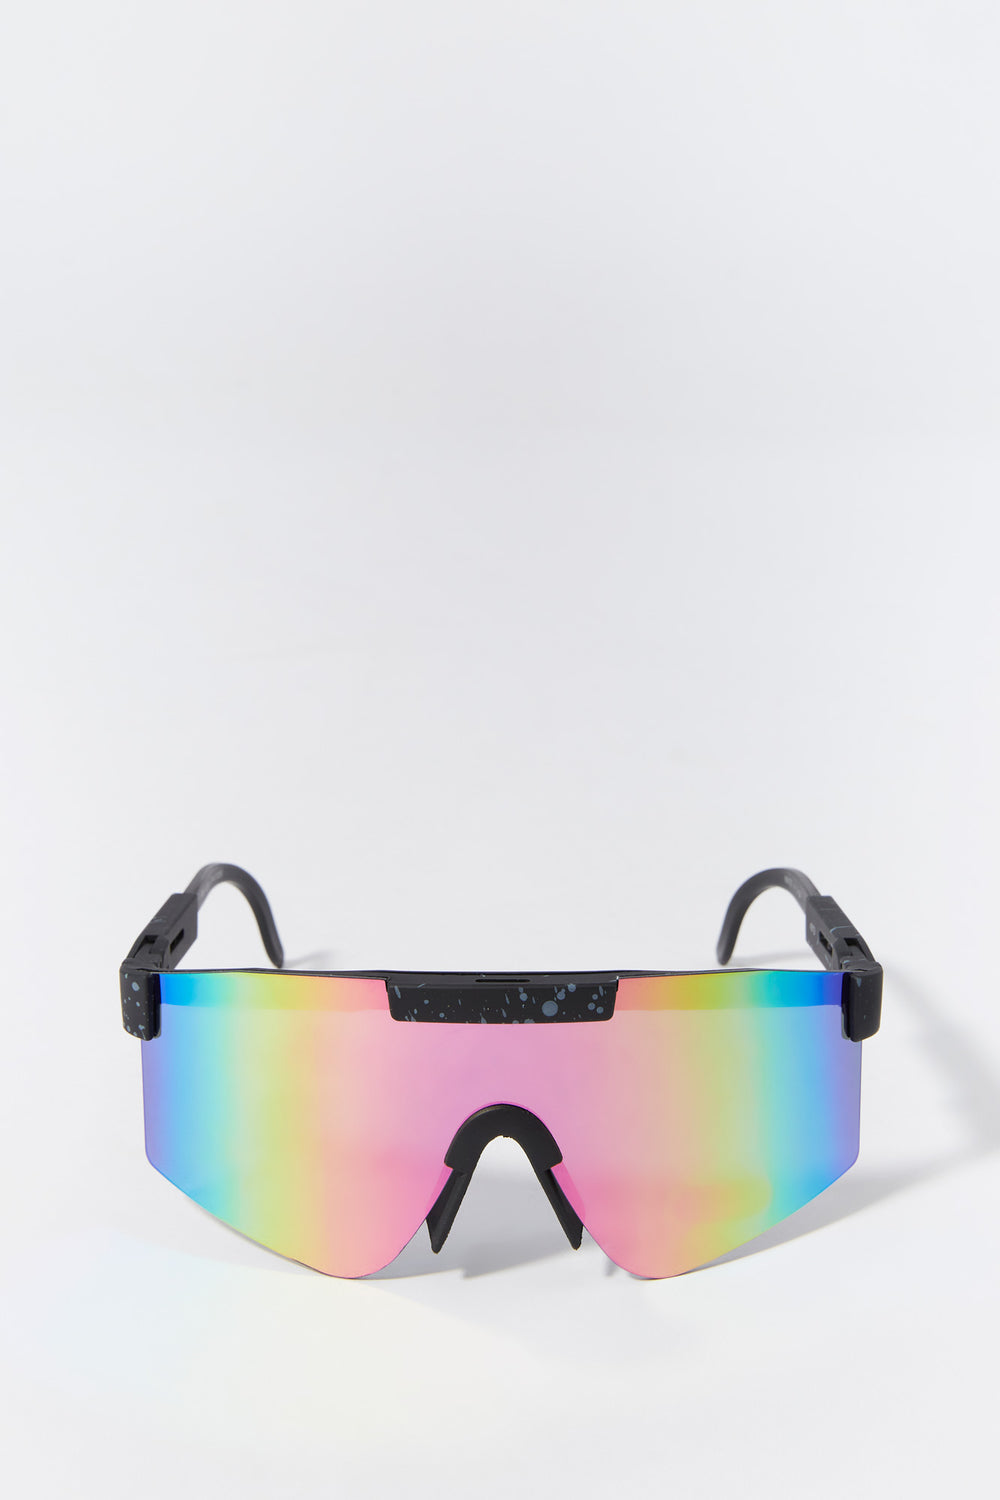 Paint Splatter Soft Touch Shield Sunglasses Paint Splatter Soft Touch Shield Sunglasses 3